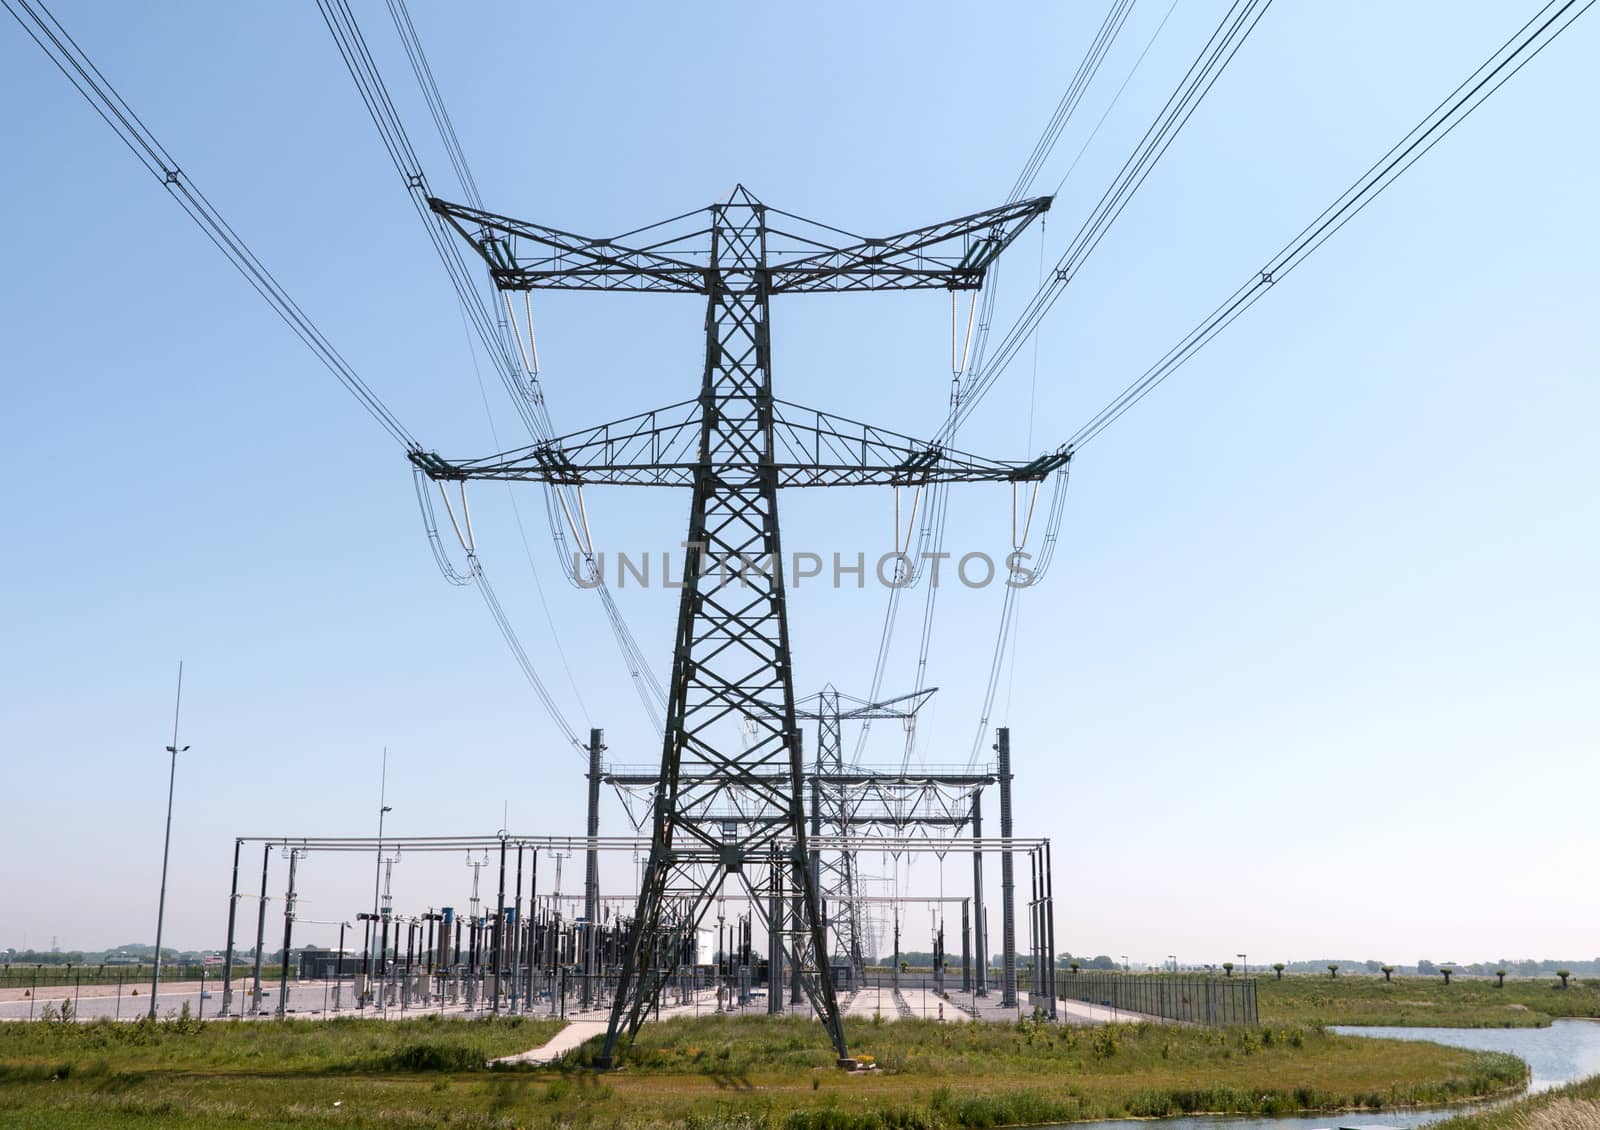 Electricity pylon by compuinfoto